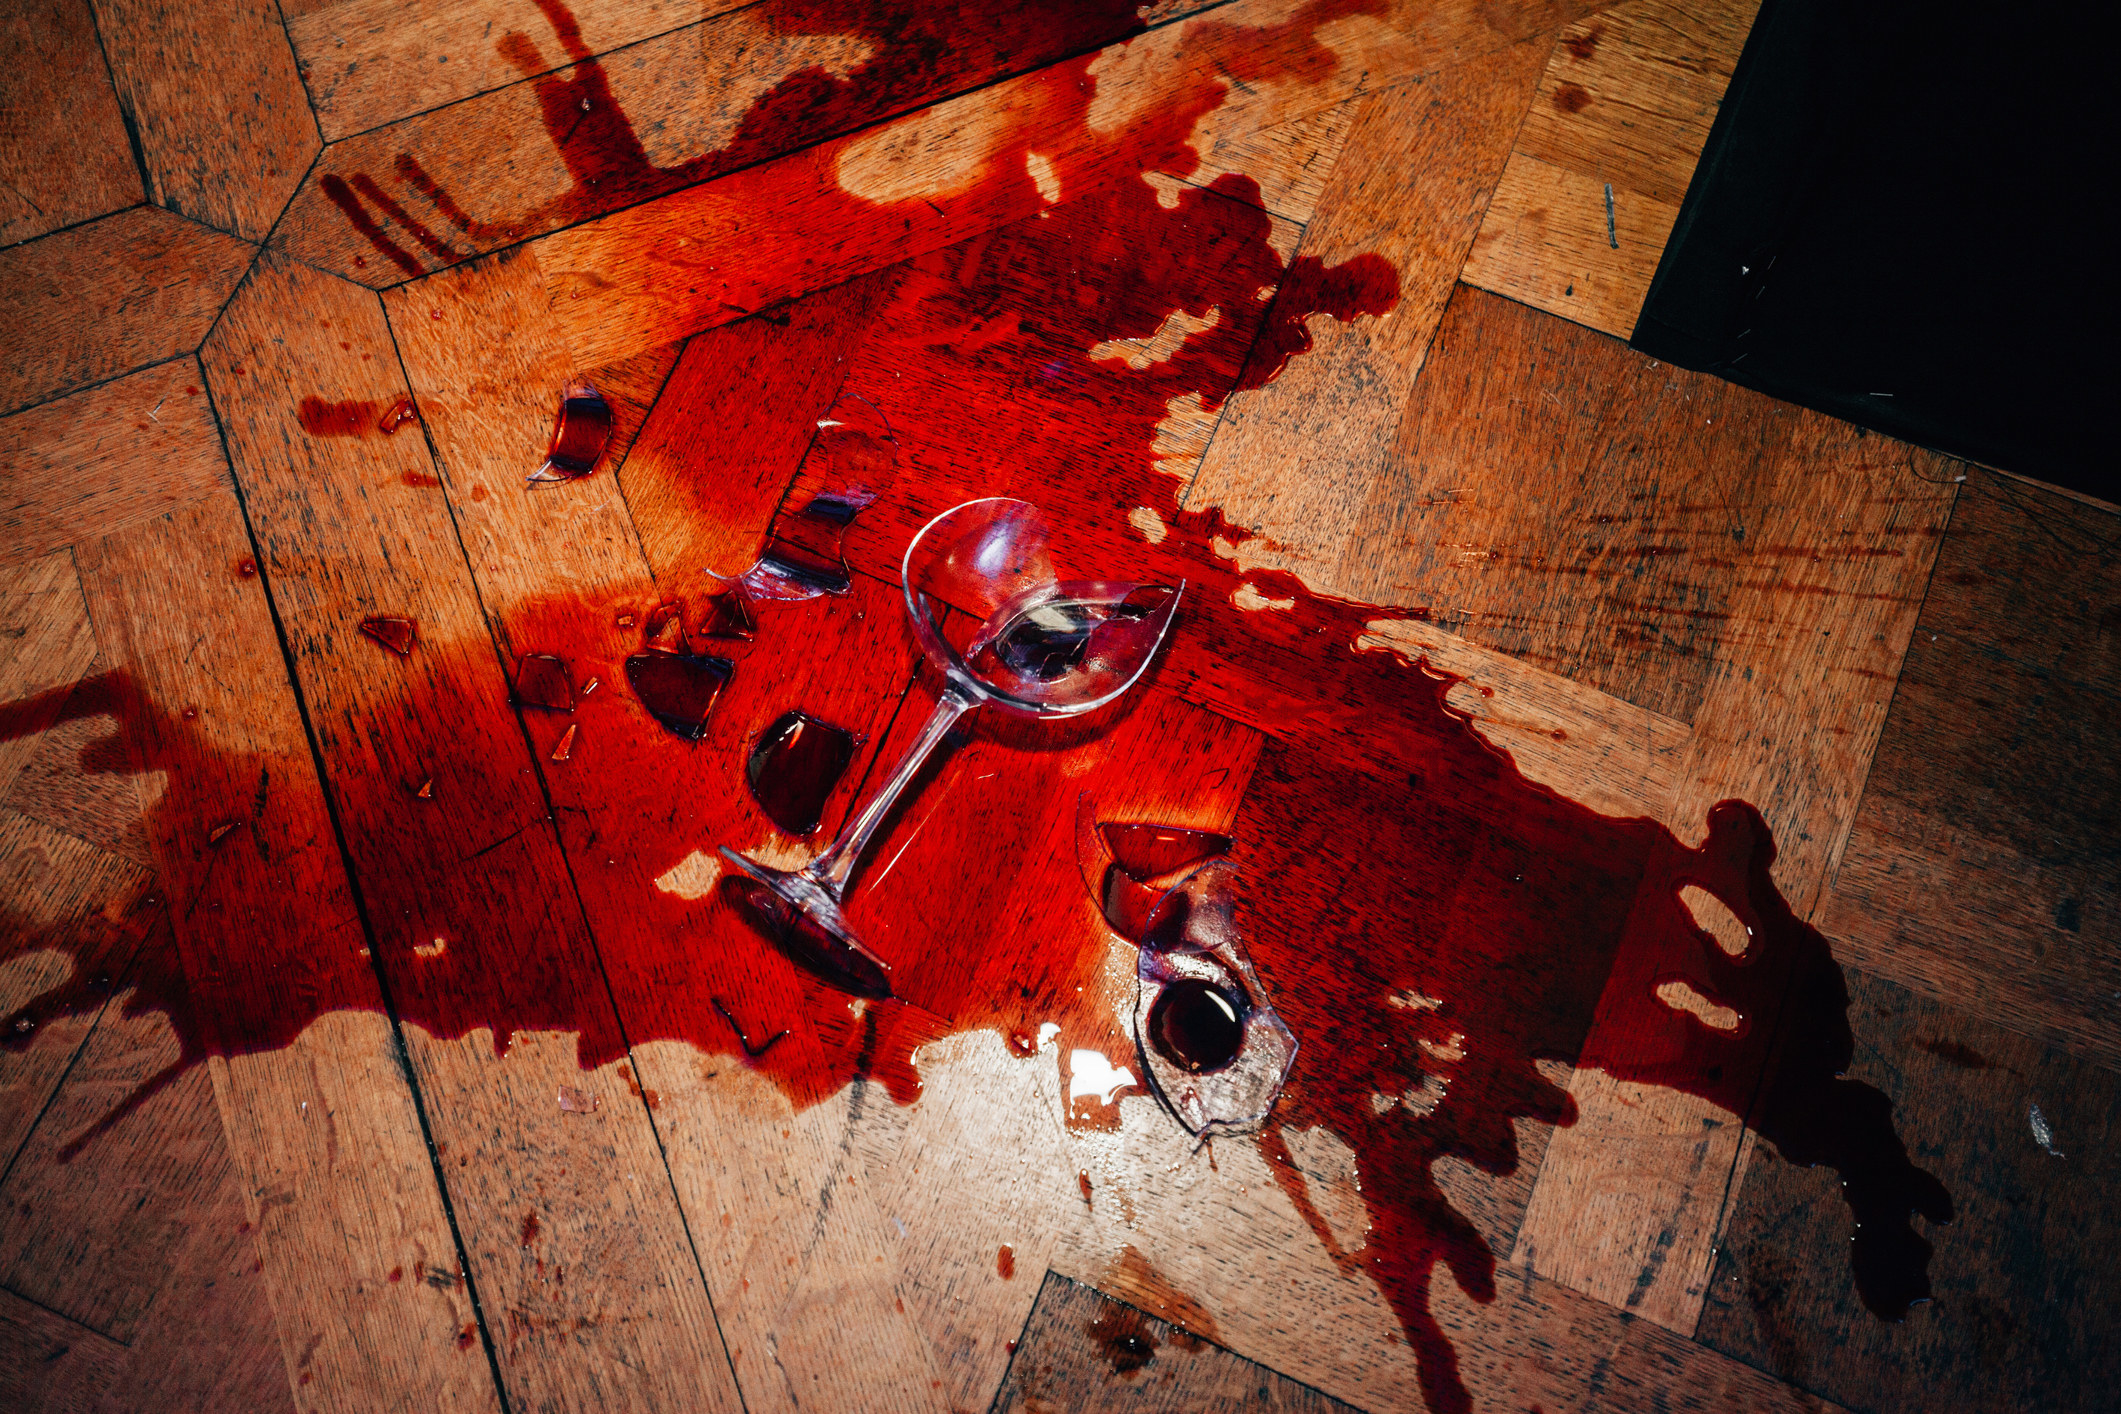 A broken red wine glass on the floor